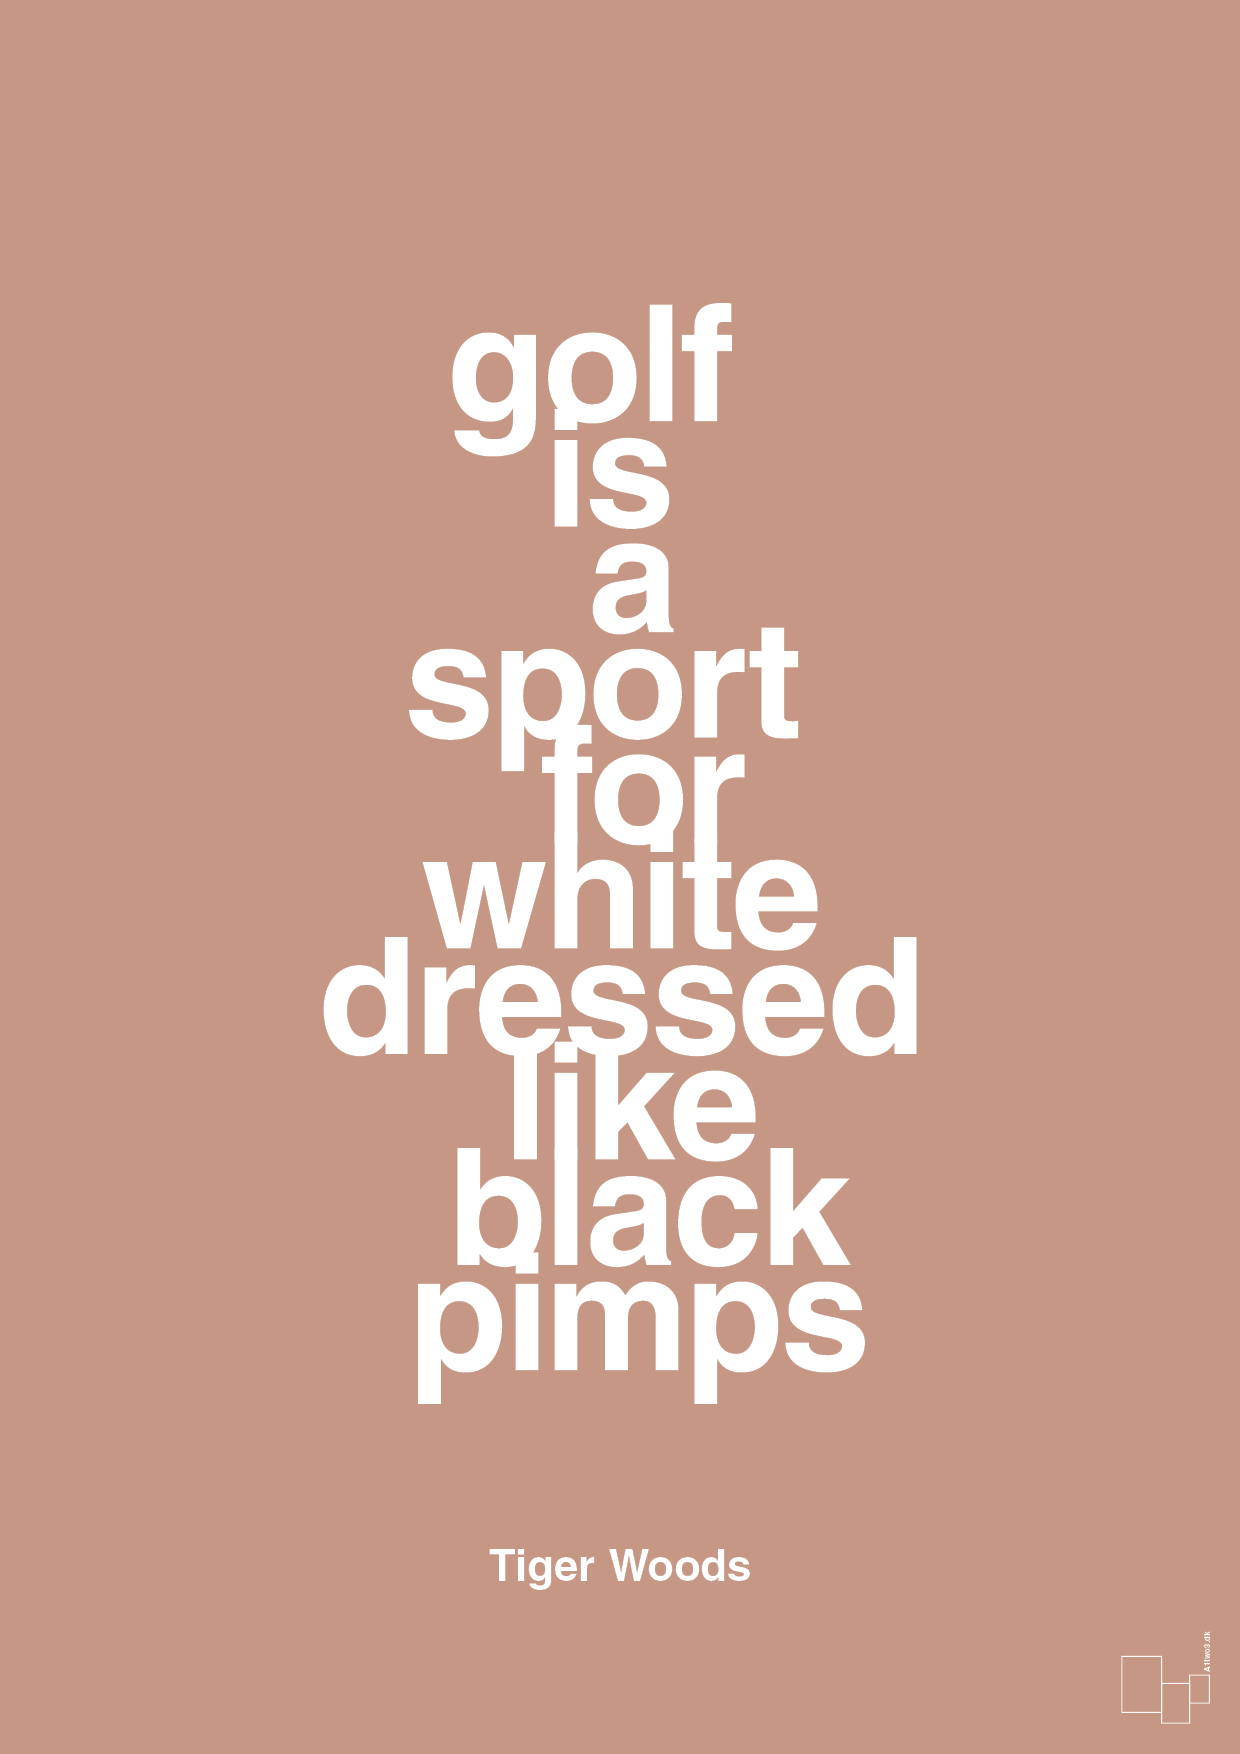 golf is a sport for white men dressed like black pimps - Plakat med Citater i Powder